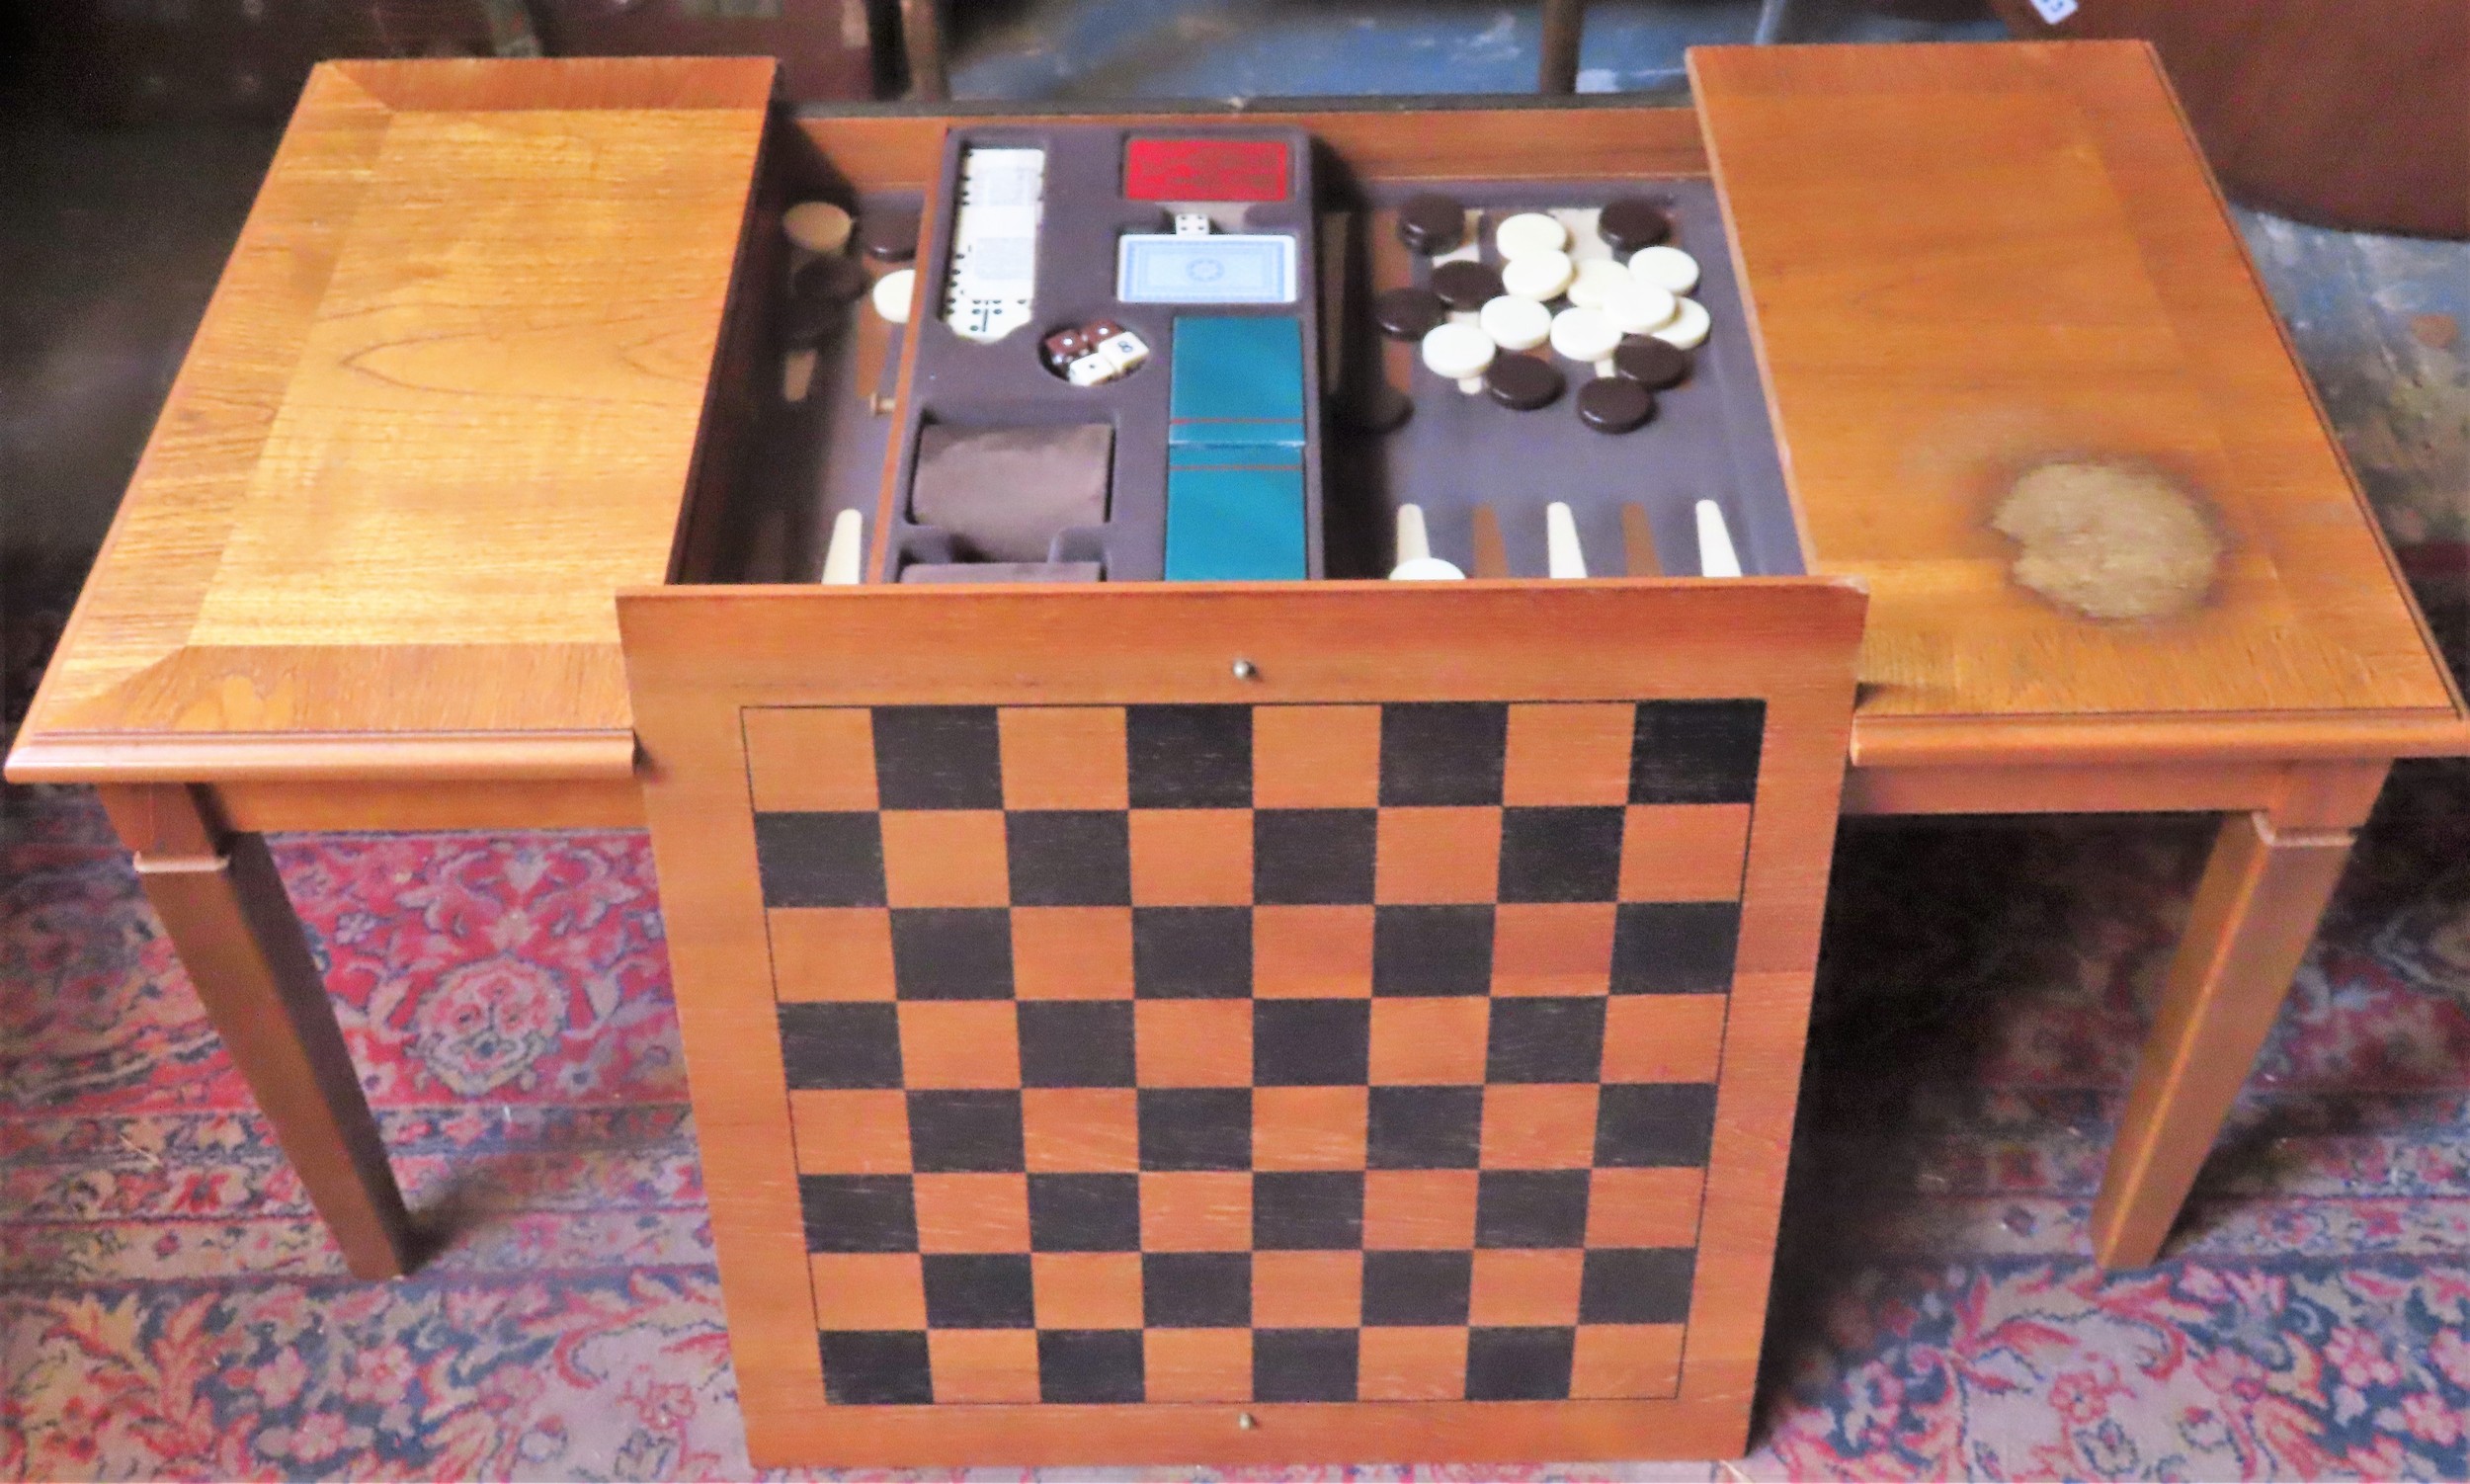 20th century games compendium coffee table. App. 43cm H x 98cm W x 50.5cm D Used condition, scuffs